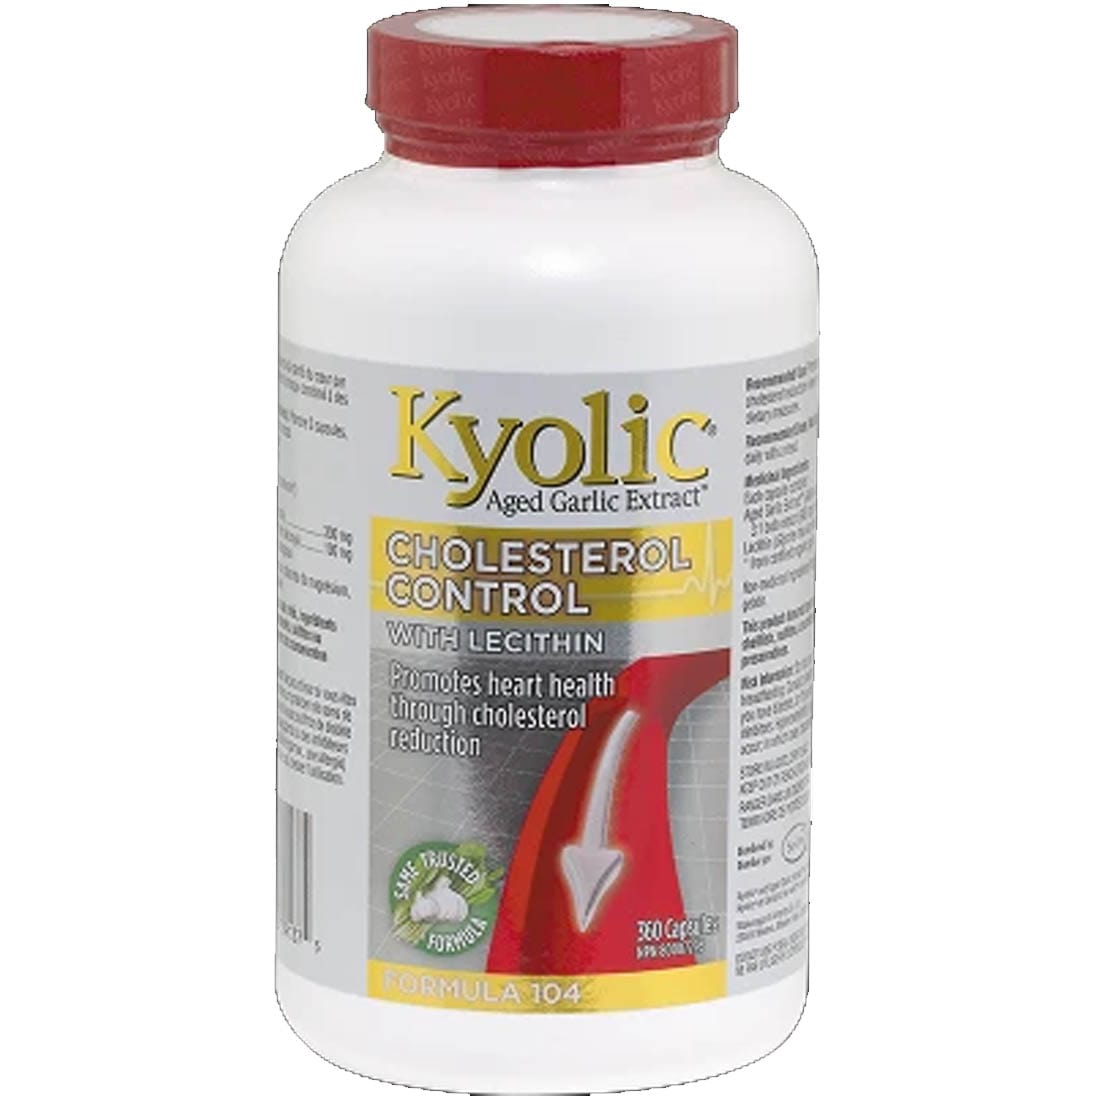 Kyolic Aged Garlic Extract, Cholesterol Control with Lecithin, Formula 104